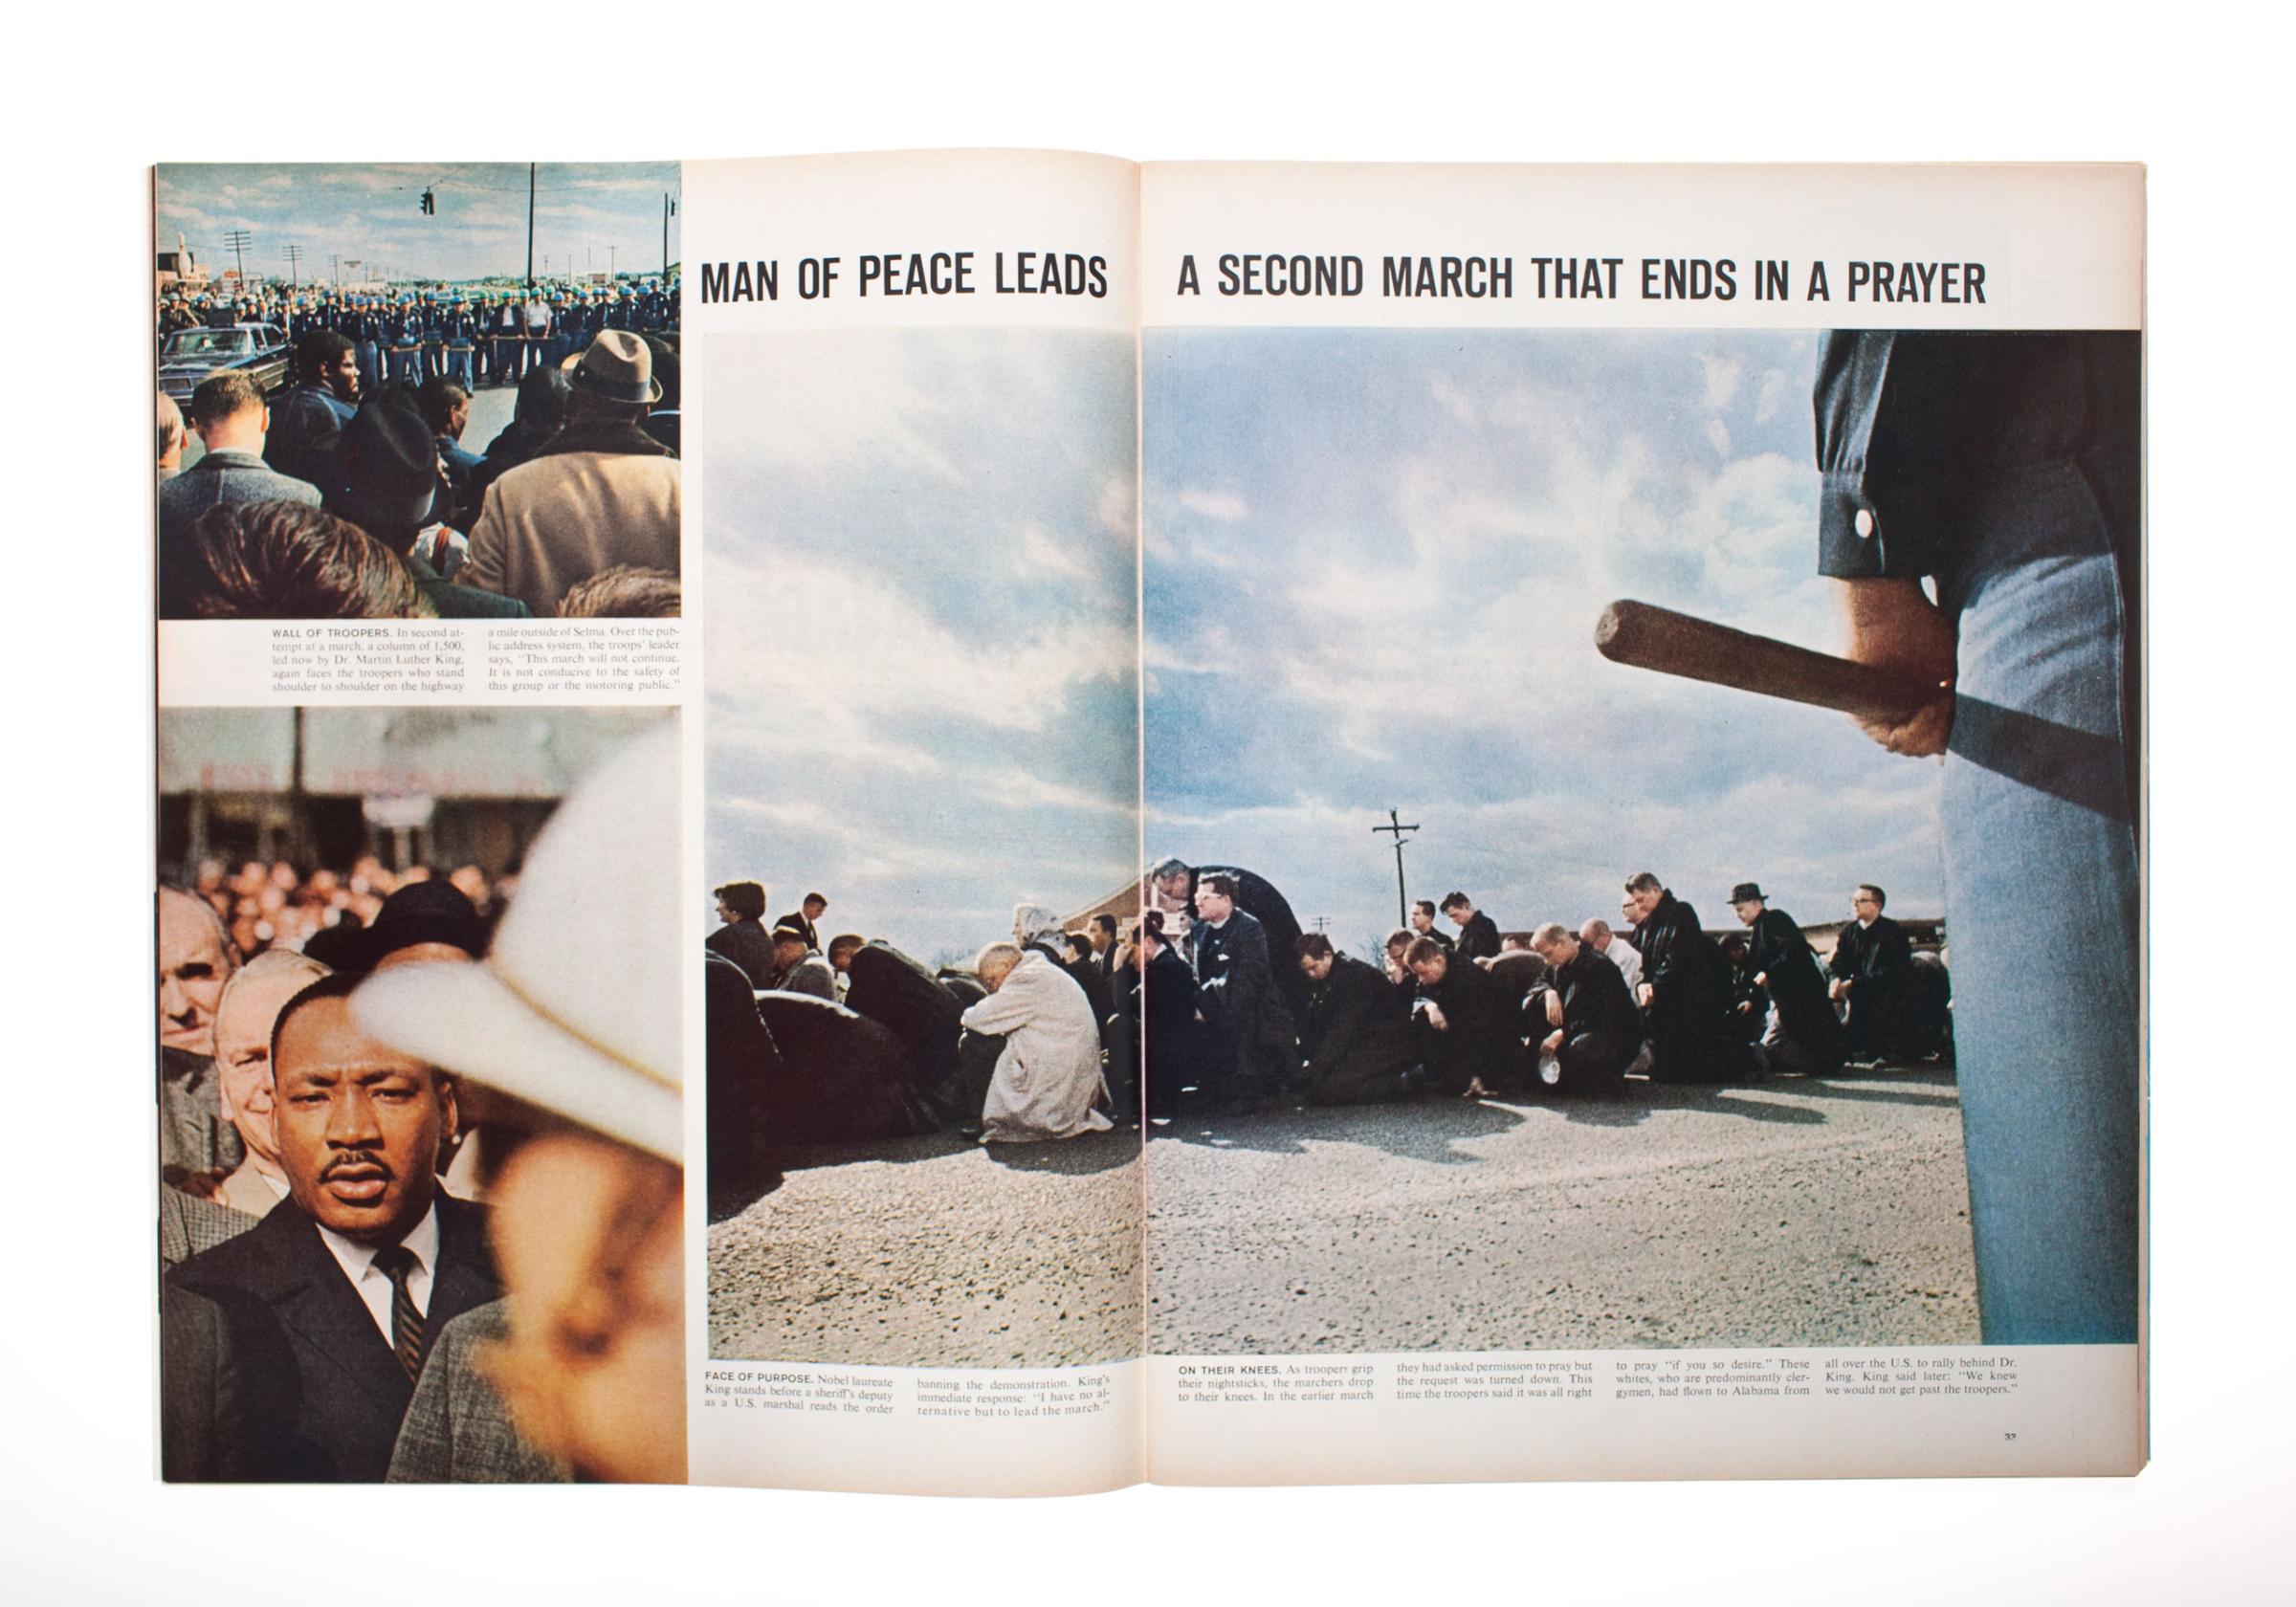 'Selma Starts the Savage Season,' LIFE, March 19, 1965